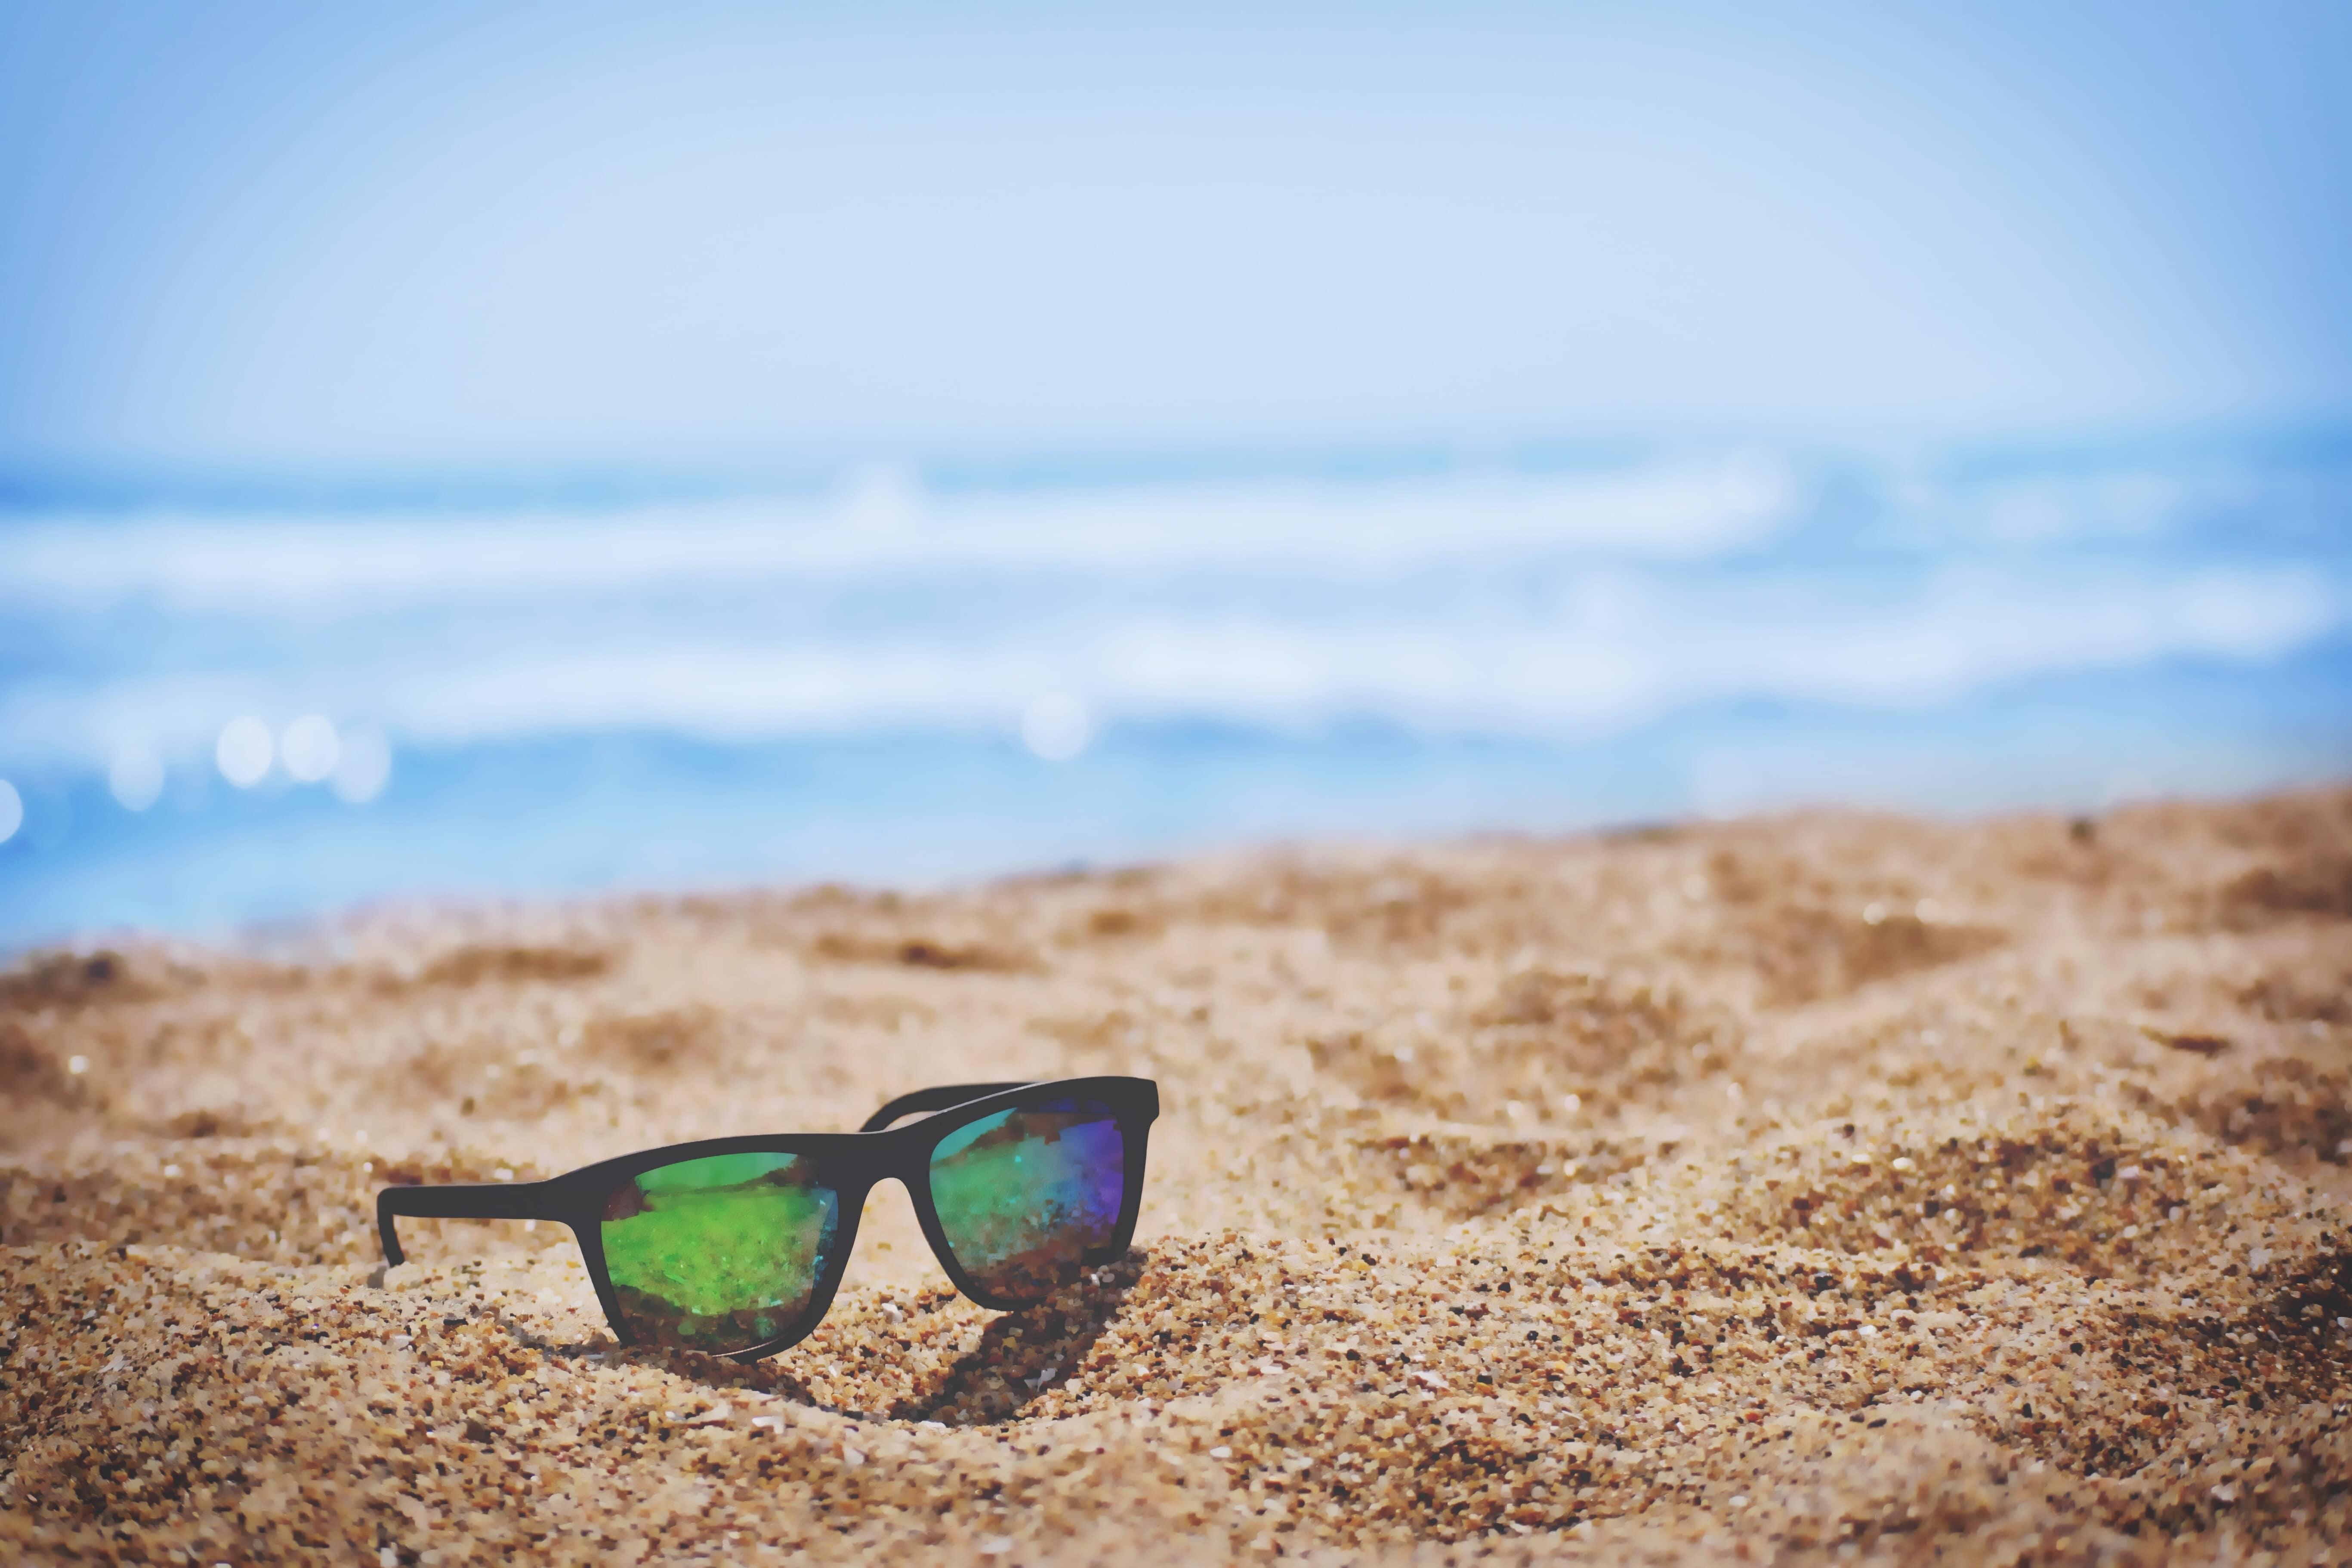 Stock image - Beach holiday, sunglasses on sandy beach - Photo by Sai Kiran Anagani